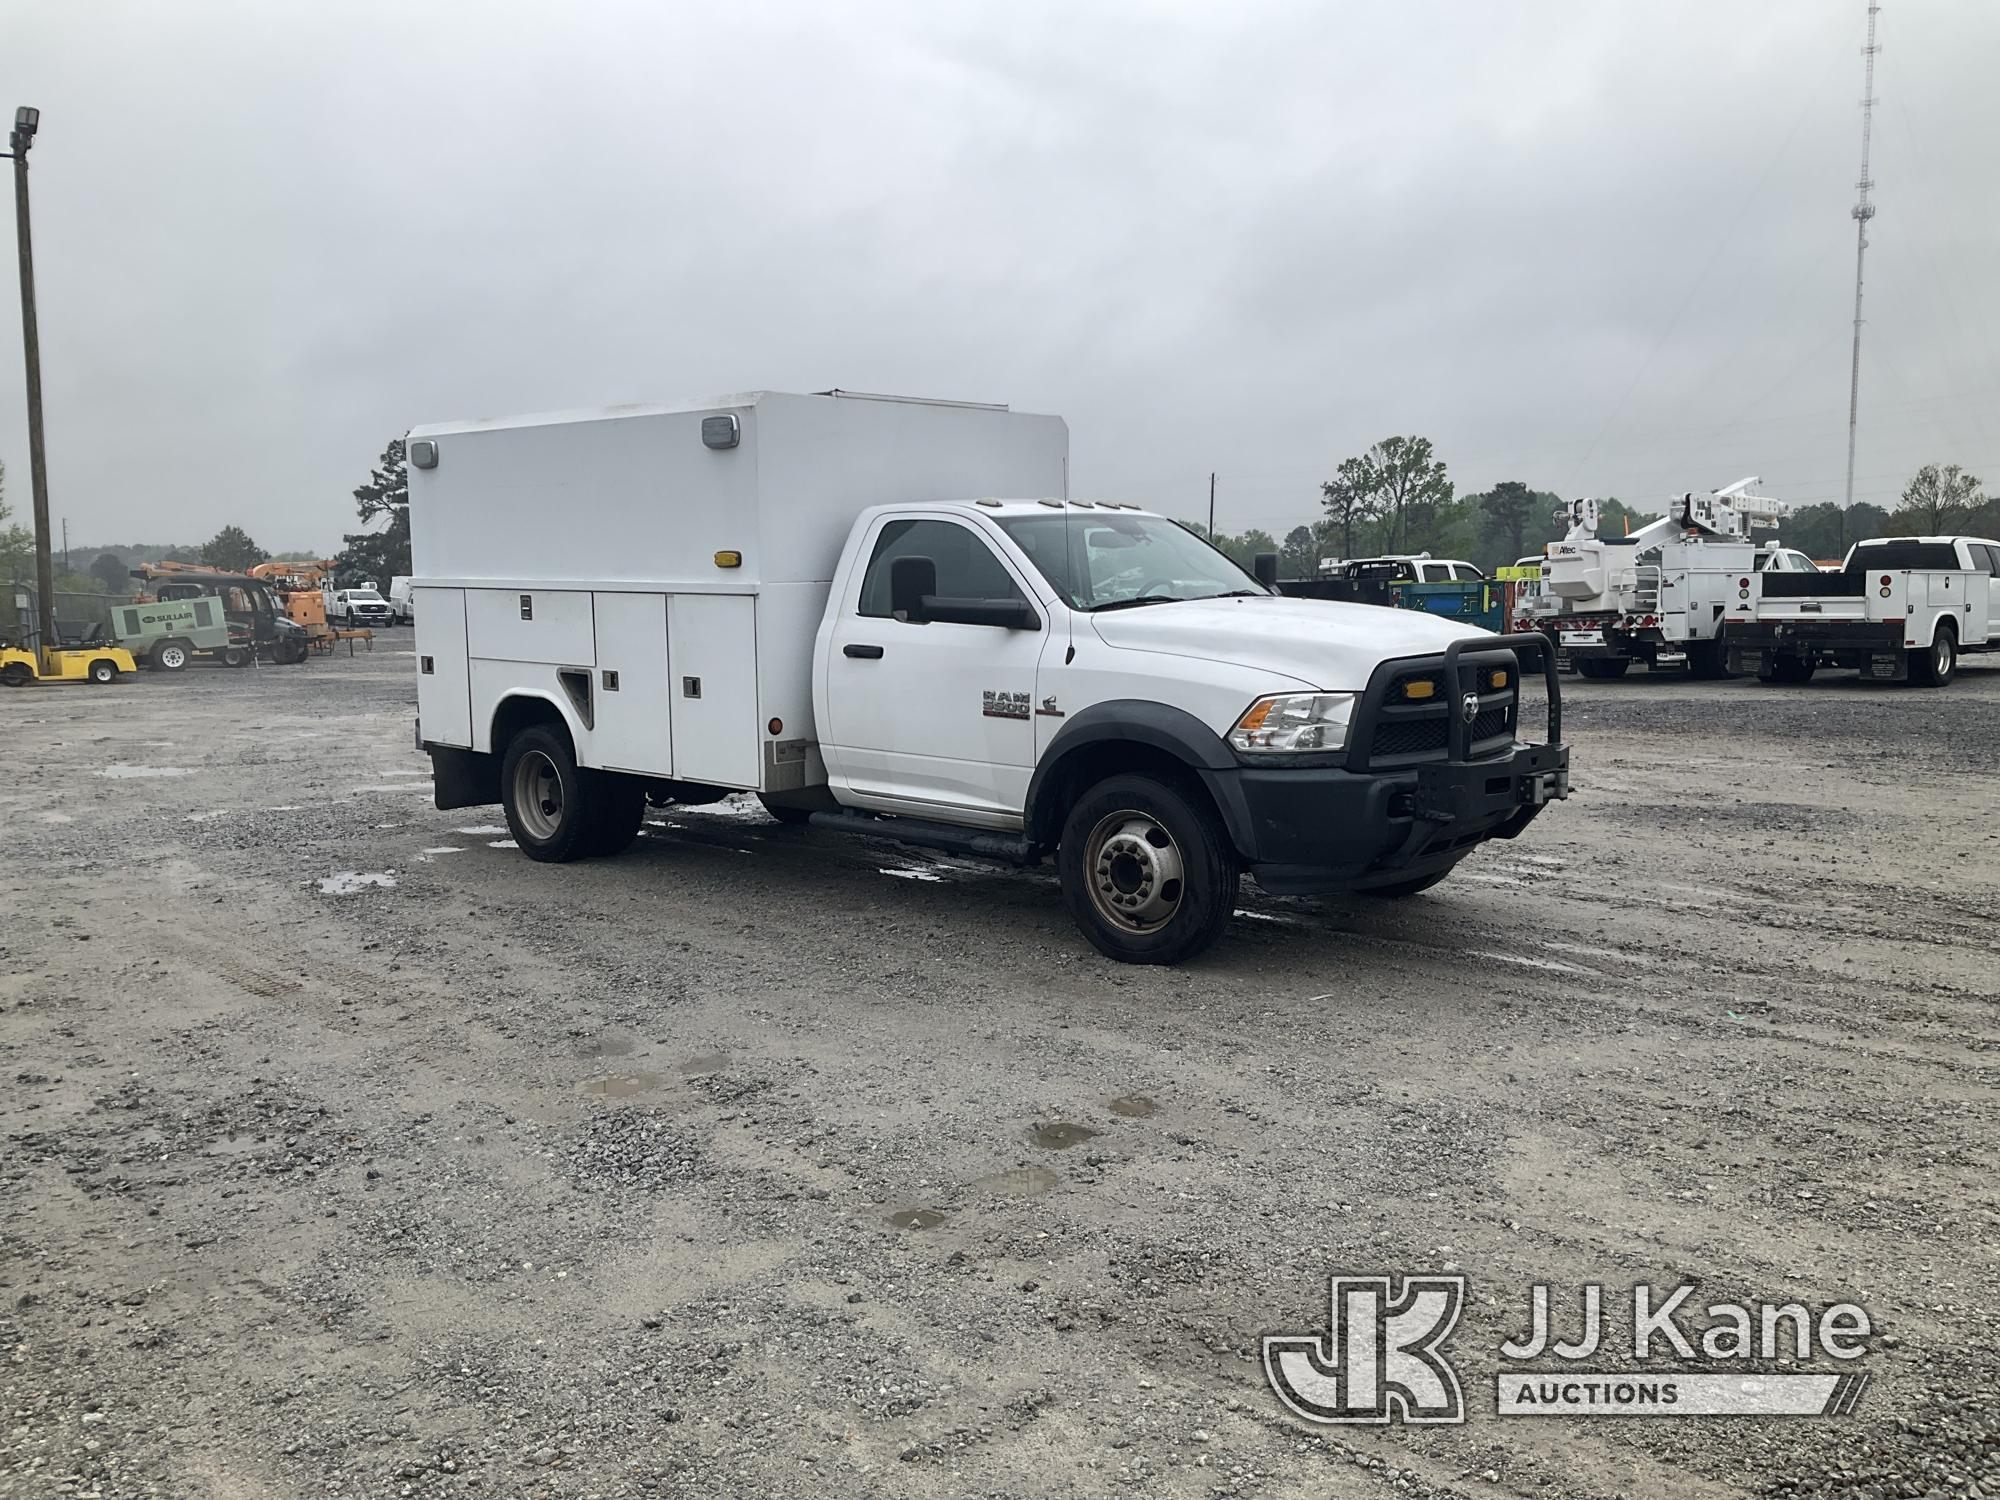 (Villa Rica, GA) 2017 RAM 5500 4x4 Enclosed High-Top Service Truck, (Southern Company Unit) Runs & M